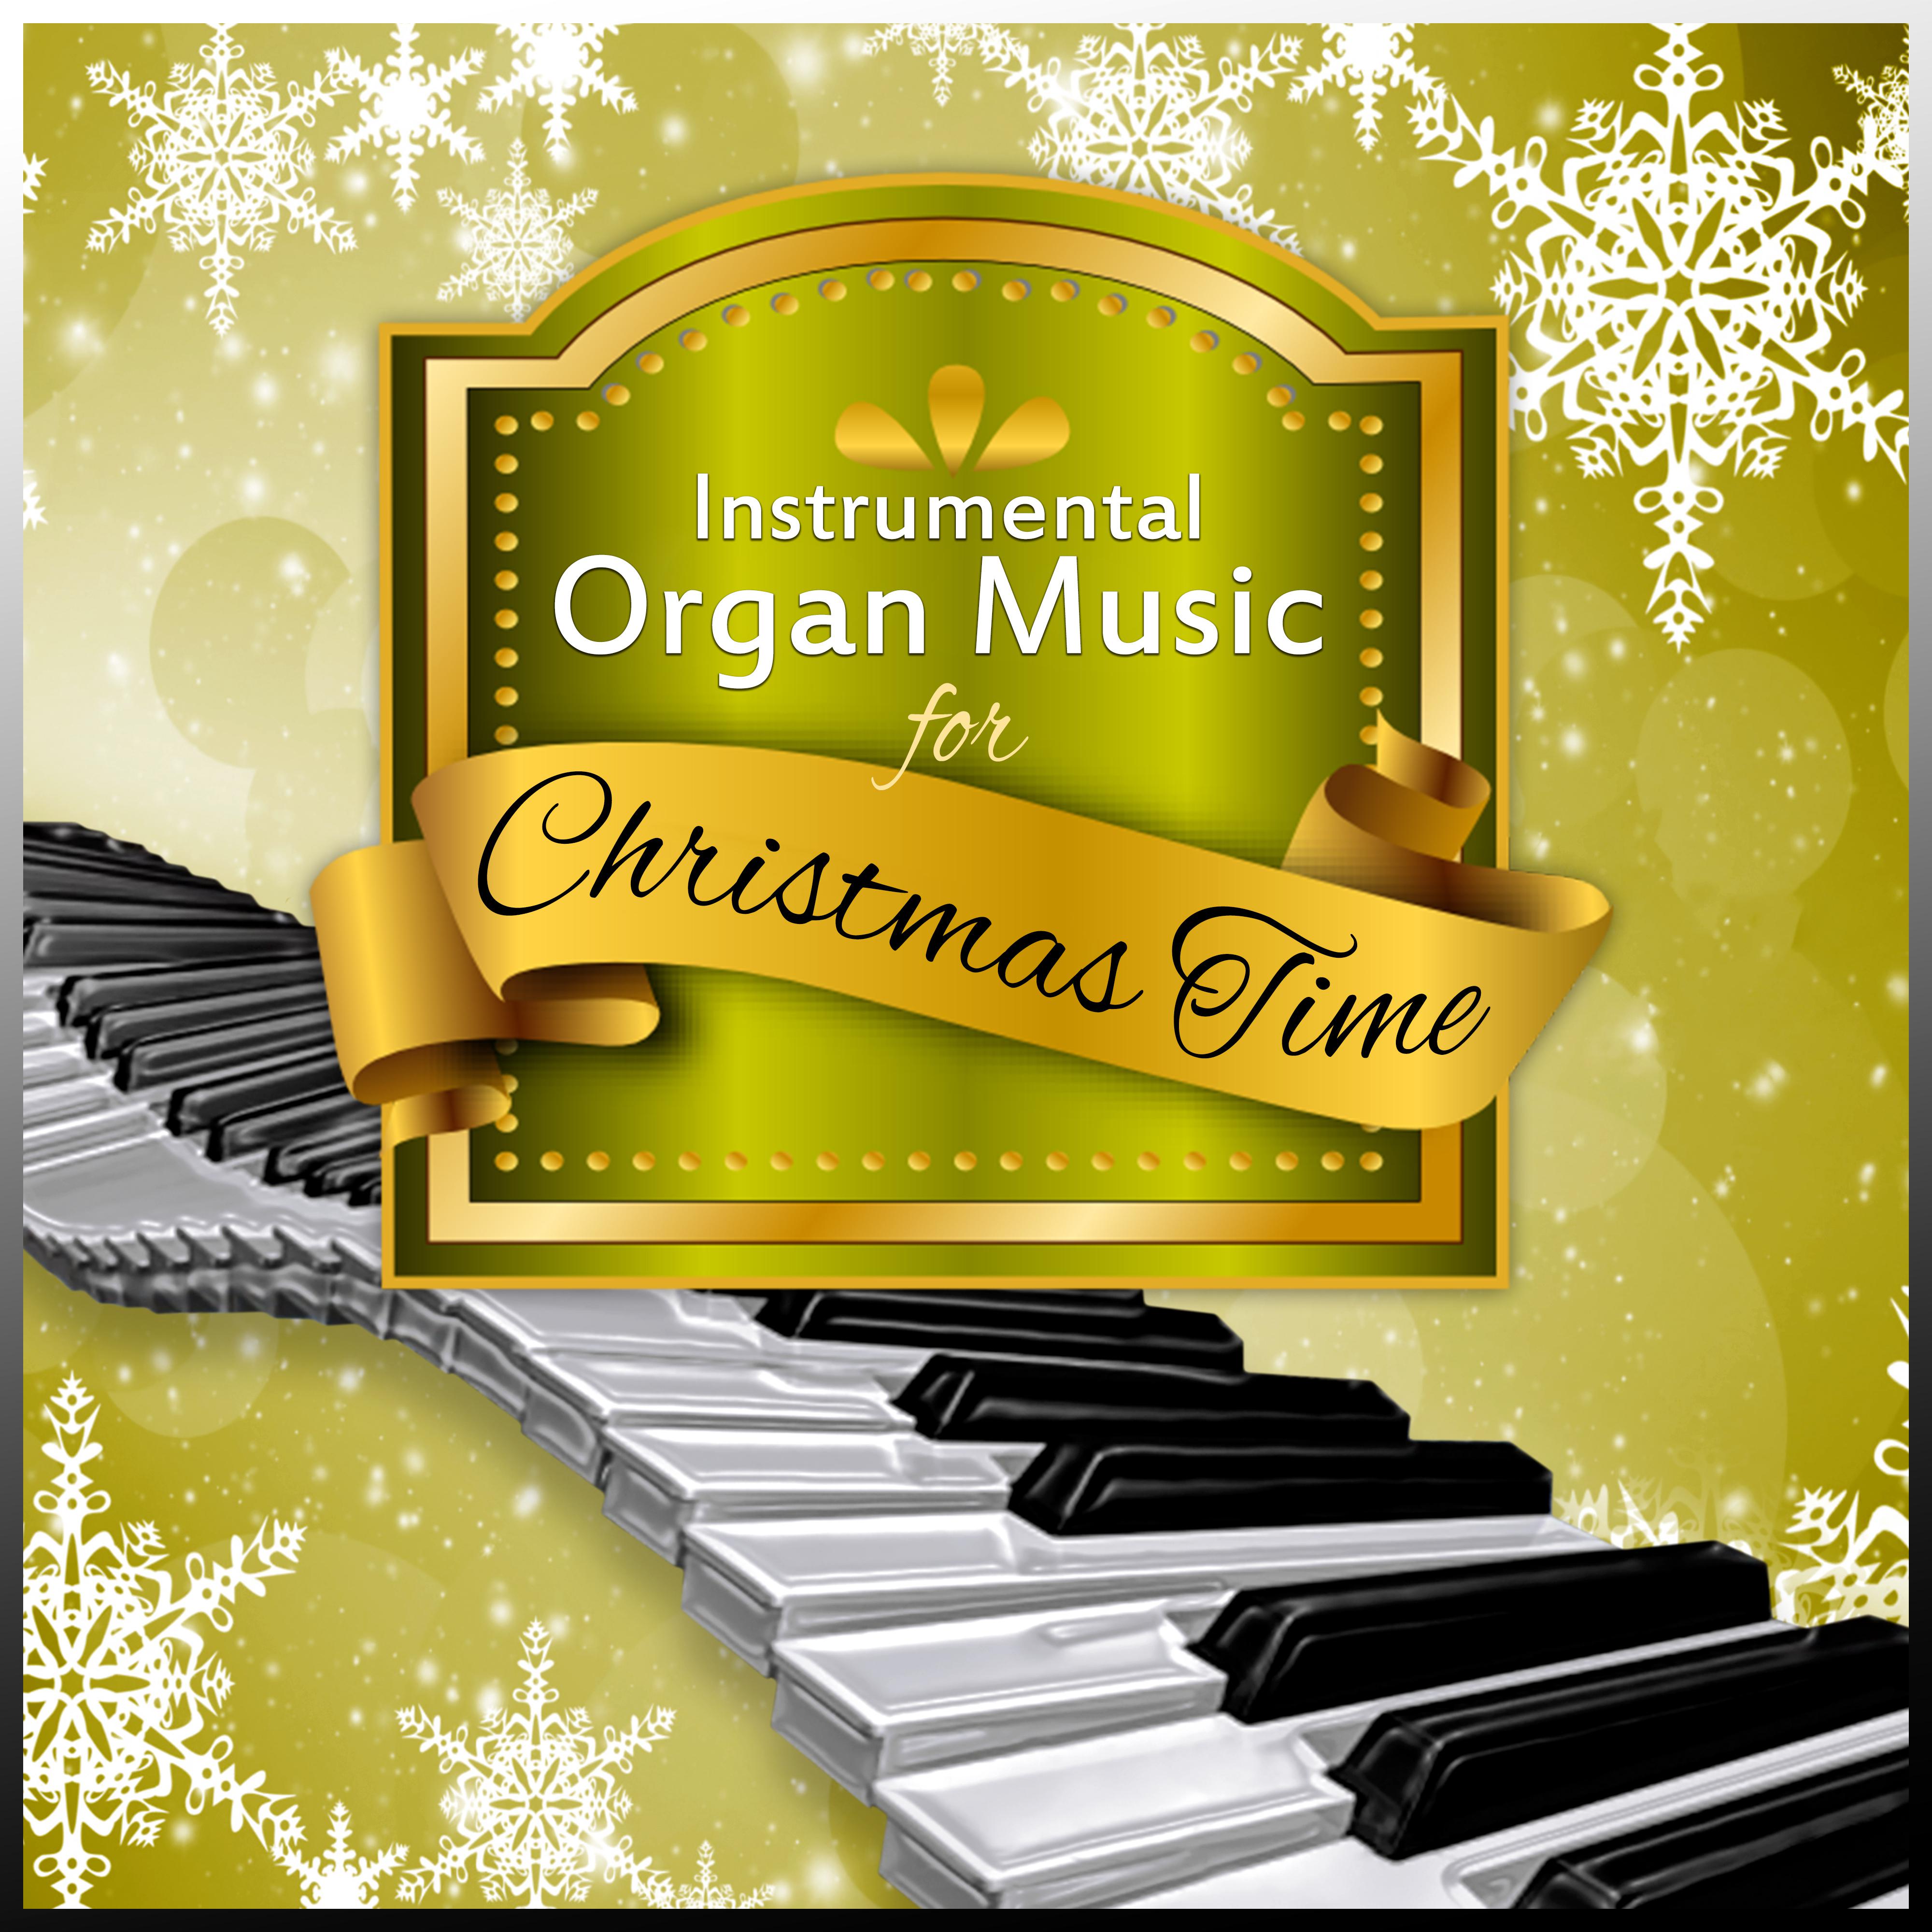 Classical Christmas Carols – Instrumental Organ Music for Christmas Time